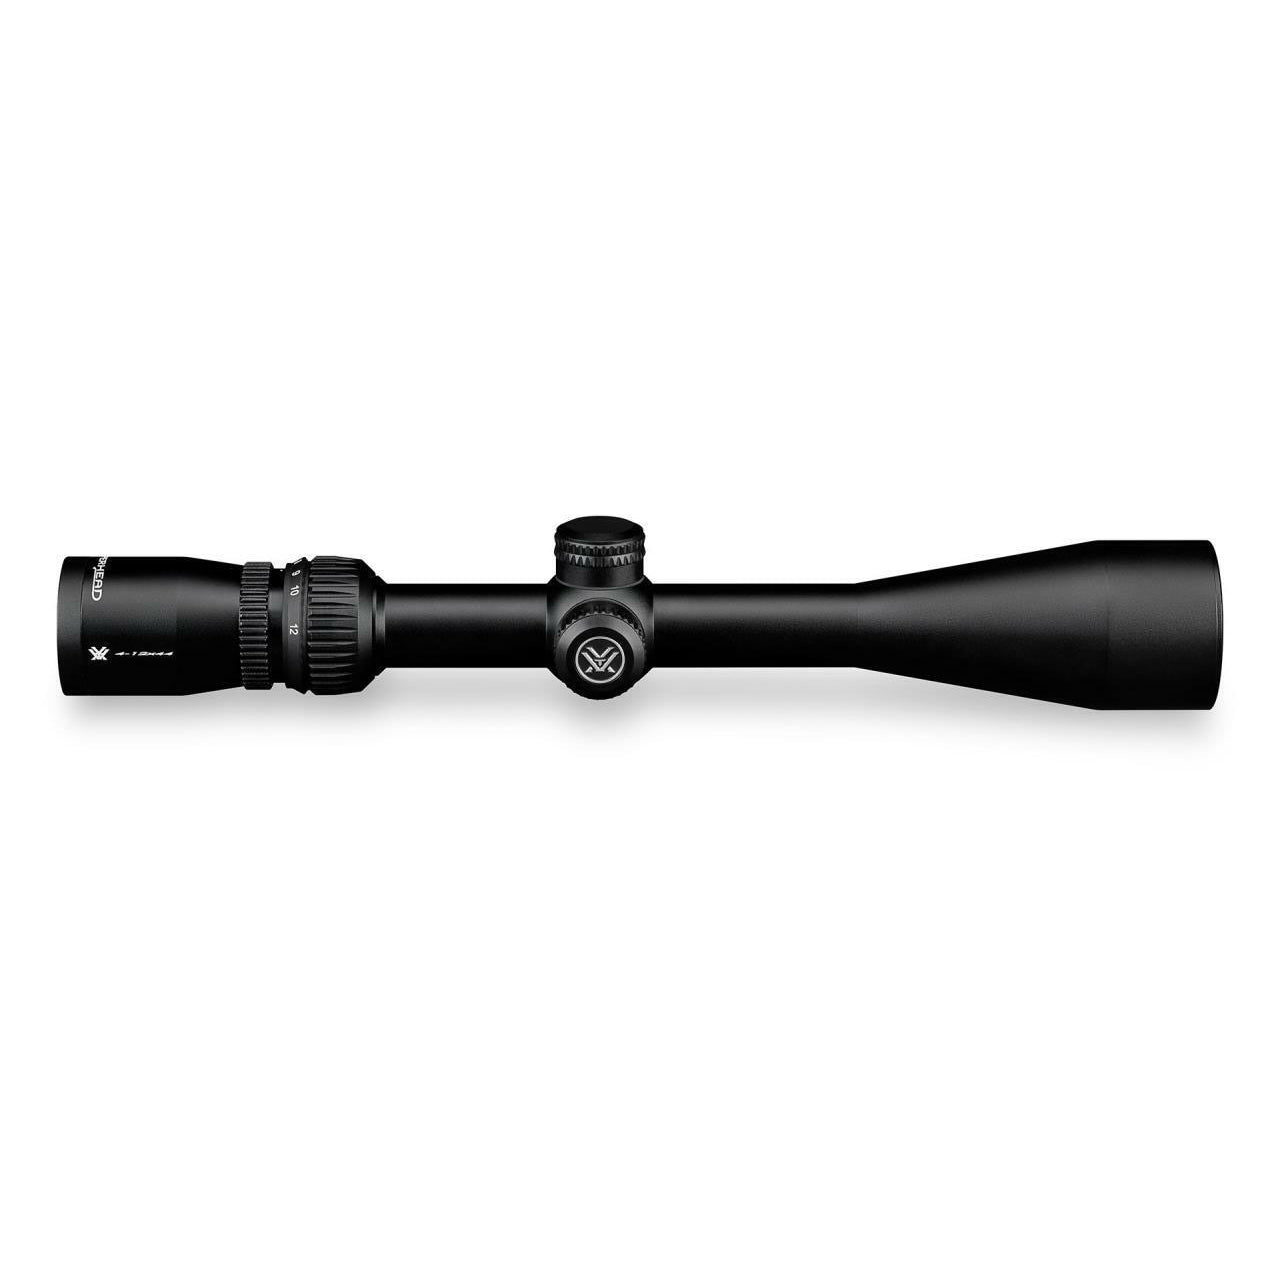 Vortex Copperhead Riflescope-OPTICS-Kevin's Fine Outdoor Gear & Apparel